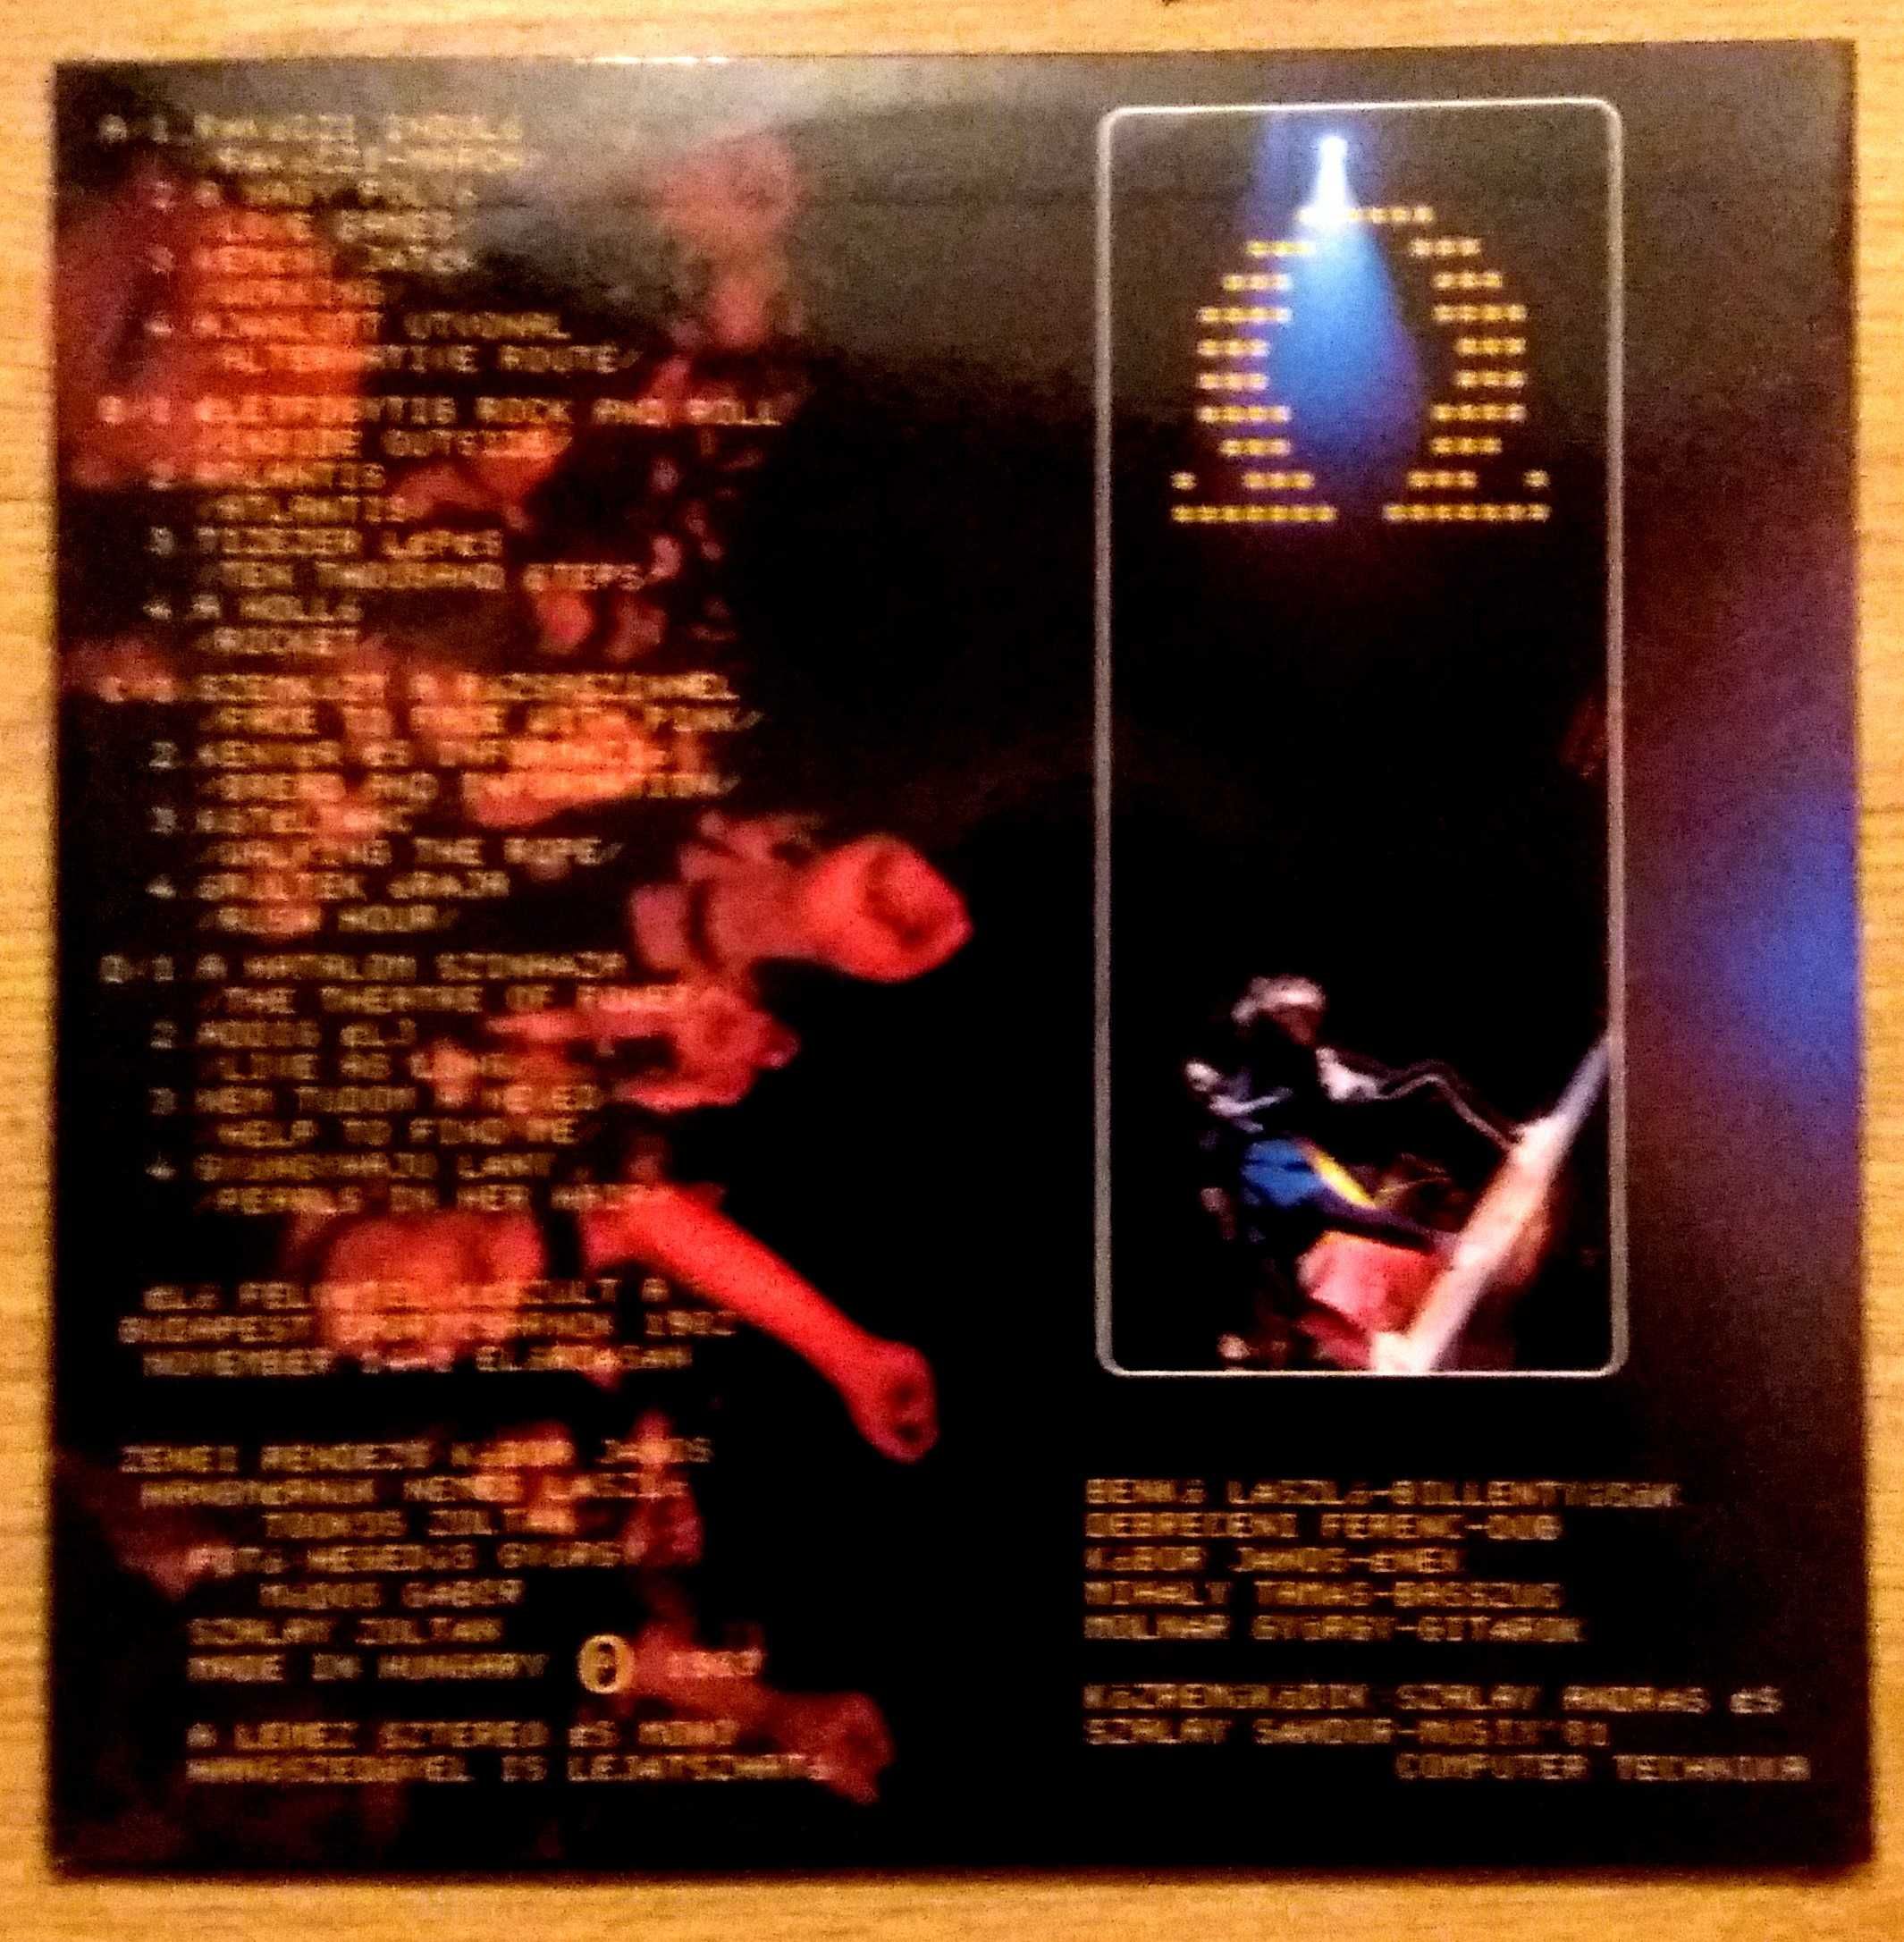 OMEGA - двойной юбилейный концертный альбом 1983 г